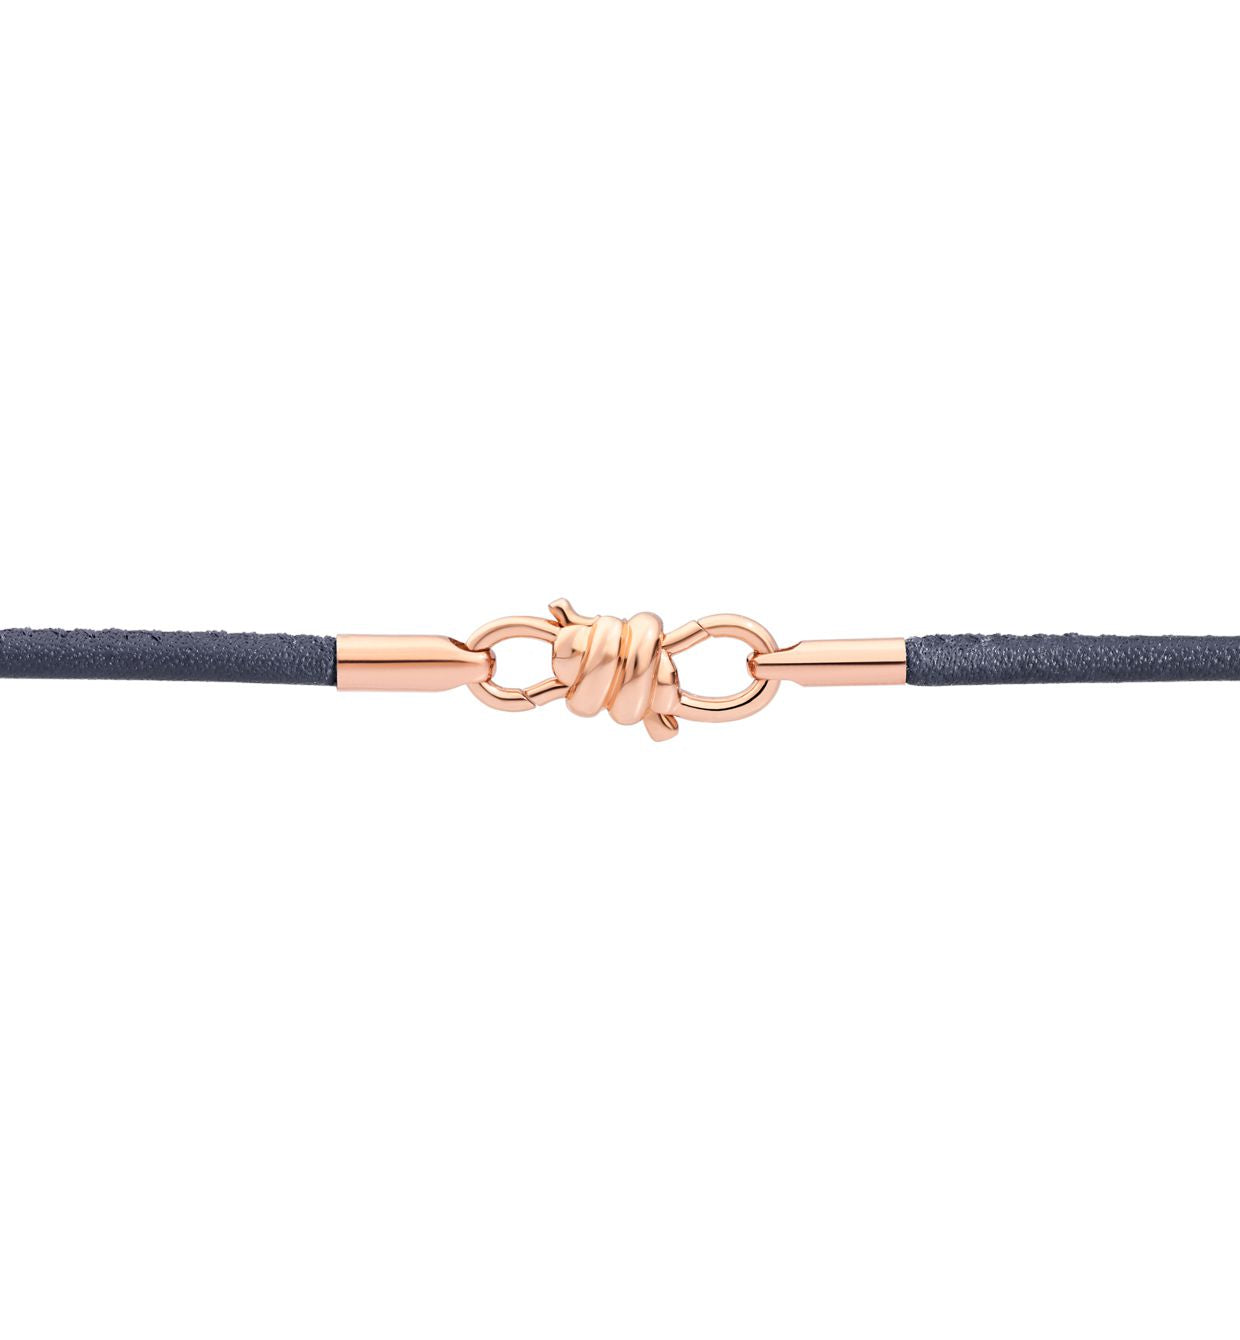 DoDo Nodo Bracelet in 9k Rose Gold with Grey Napper Leather - Orsini Jewellers NZ